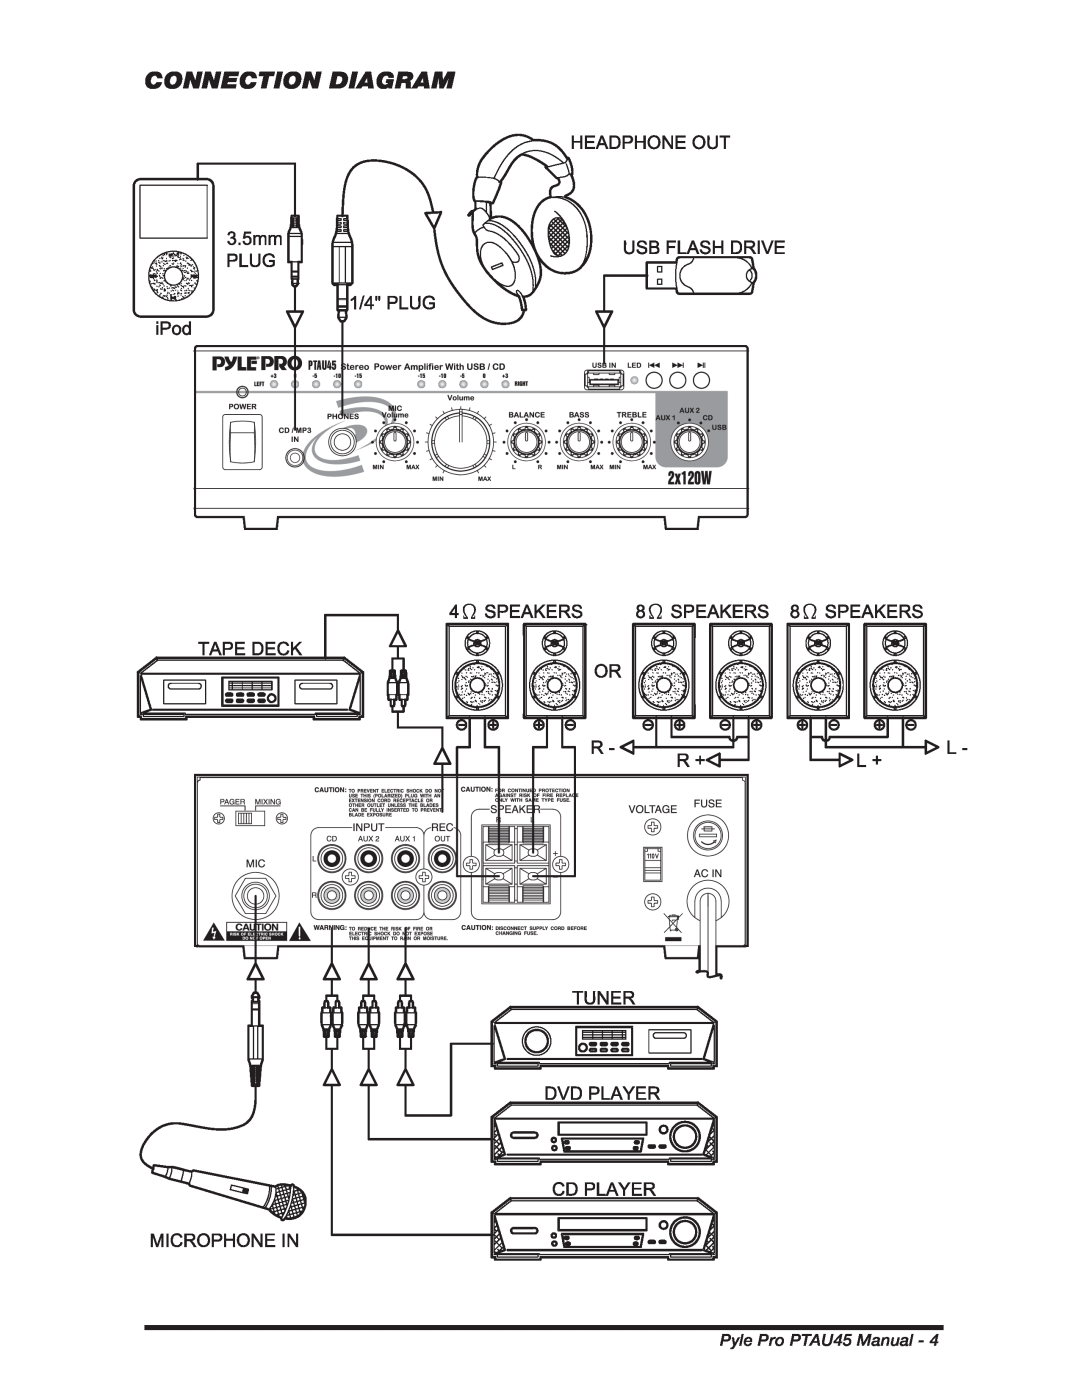 PYLE Audio manual Connection Diagram, Pyle Pro PTAU45 Manual 